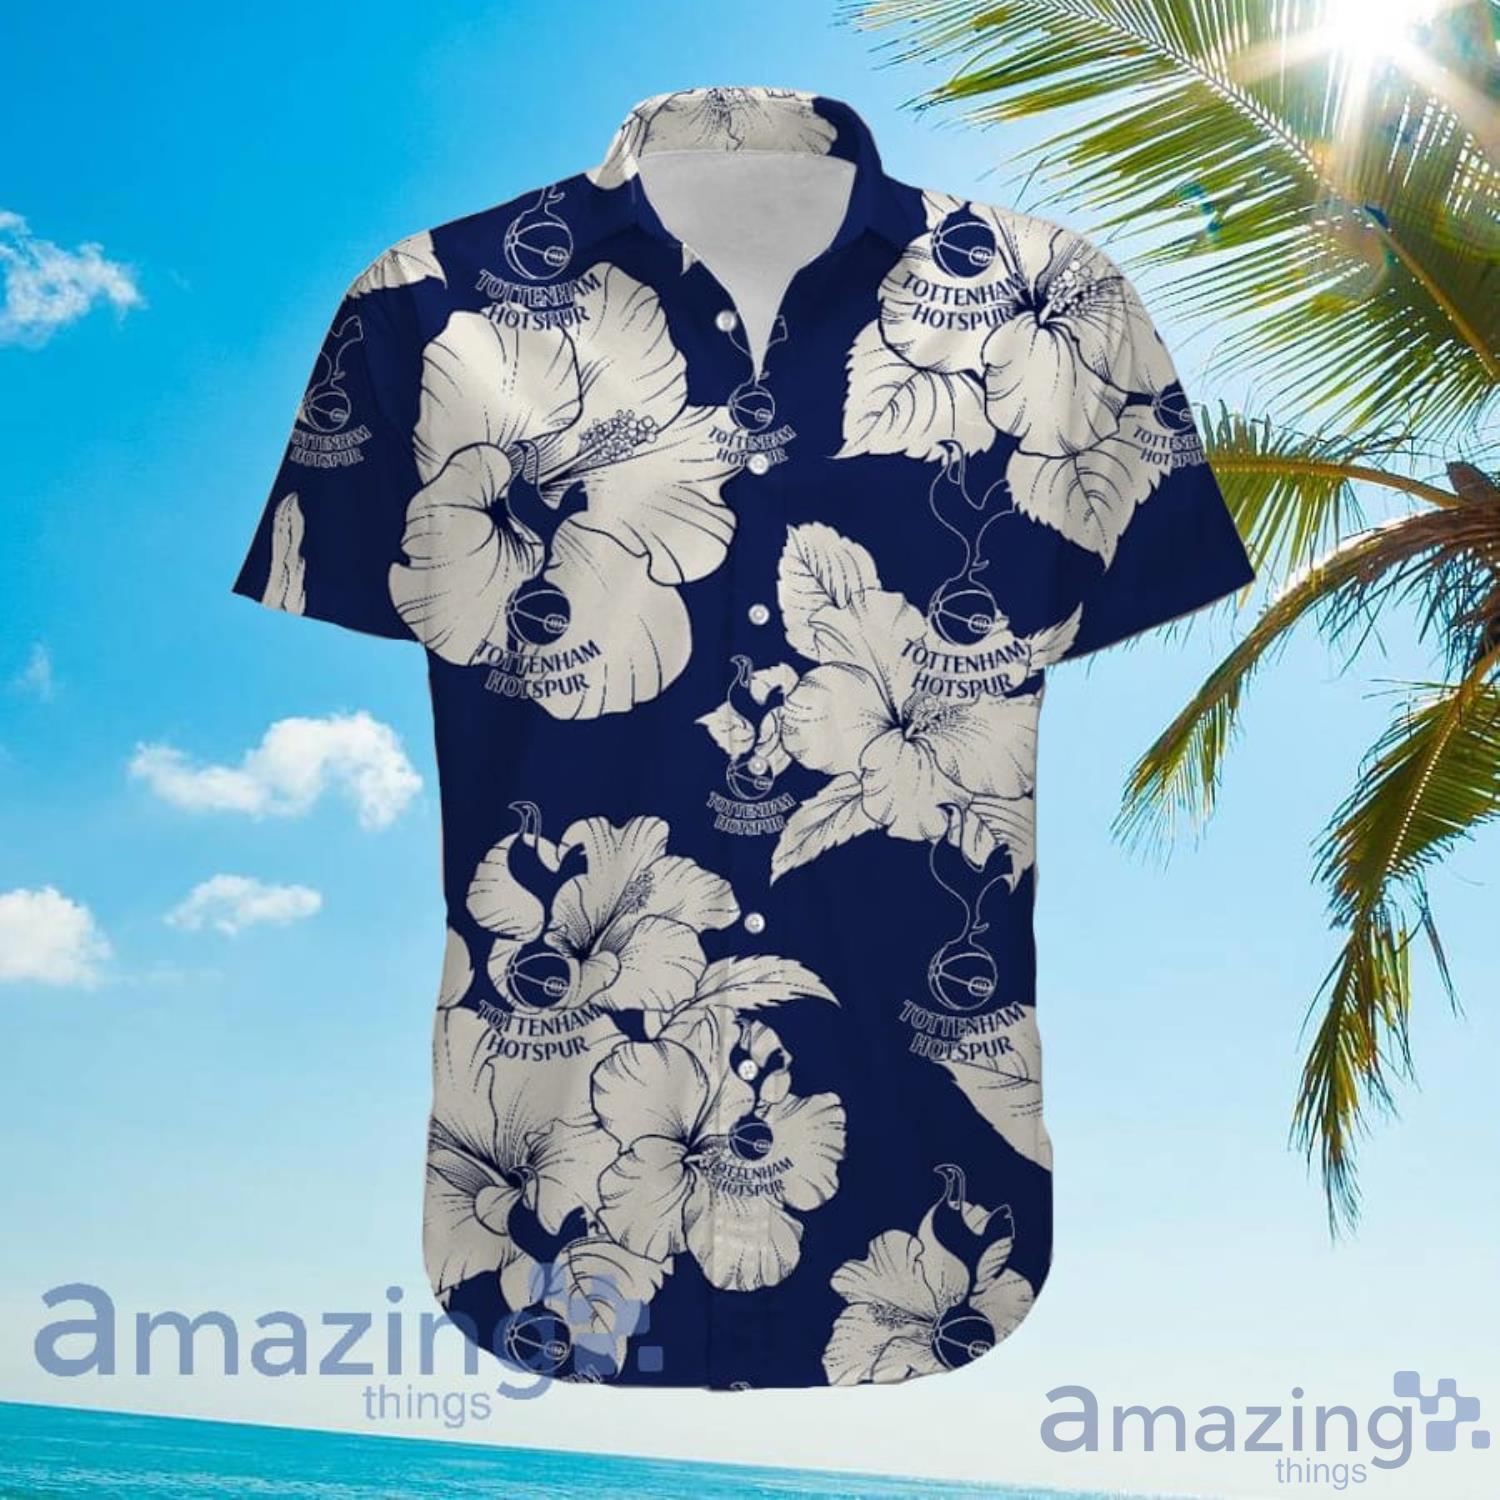 Tottenham Hotspur Hawaiian Shirt And Short Gift For Summer